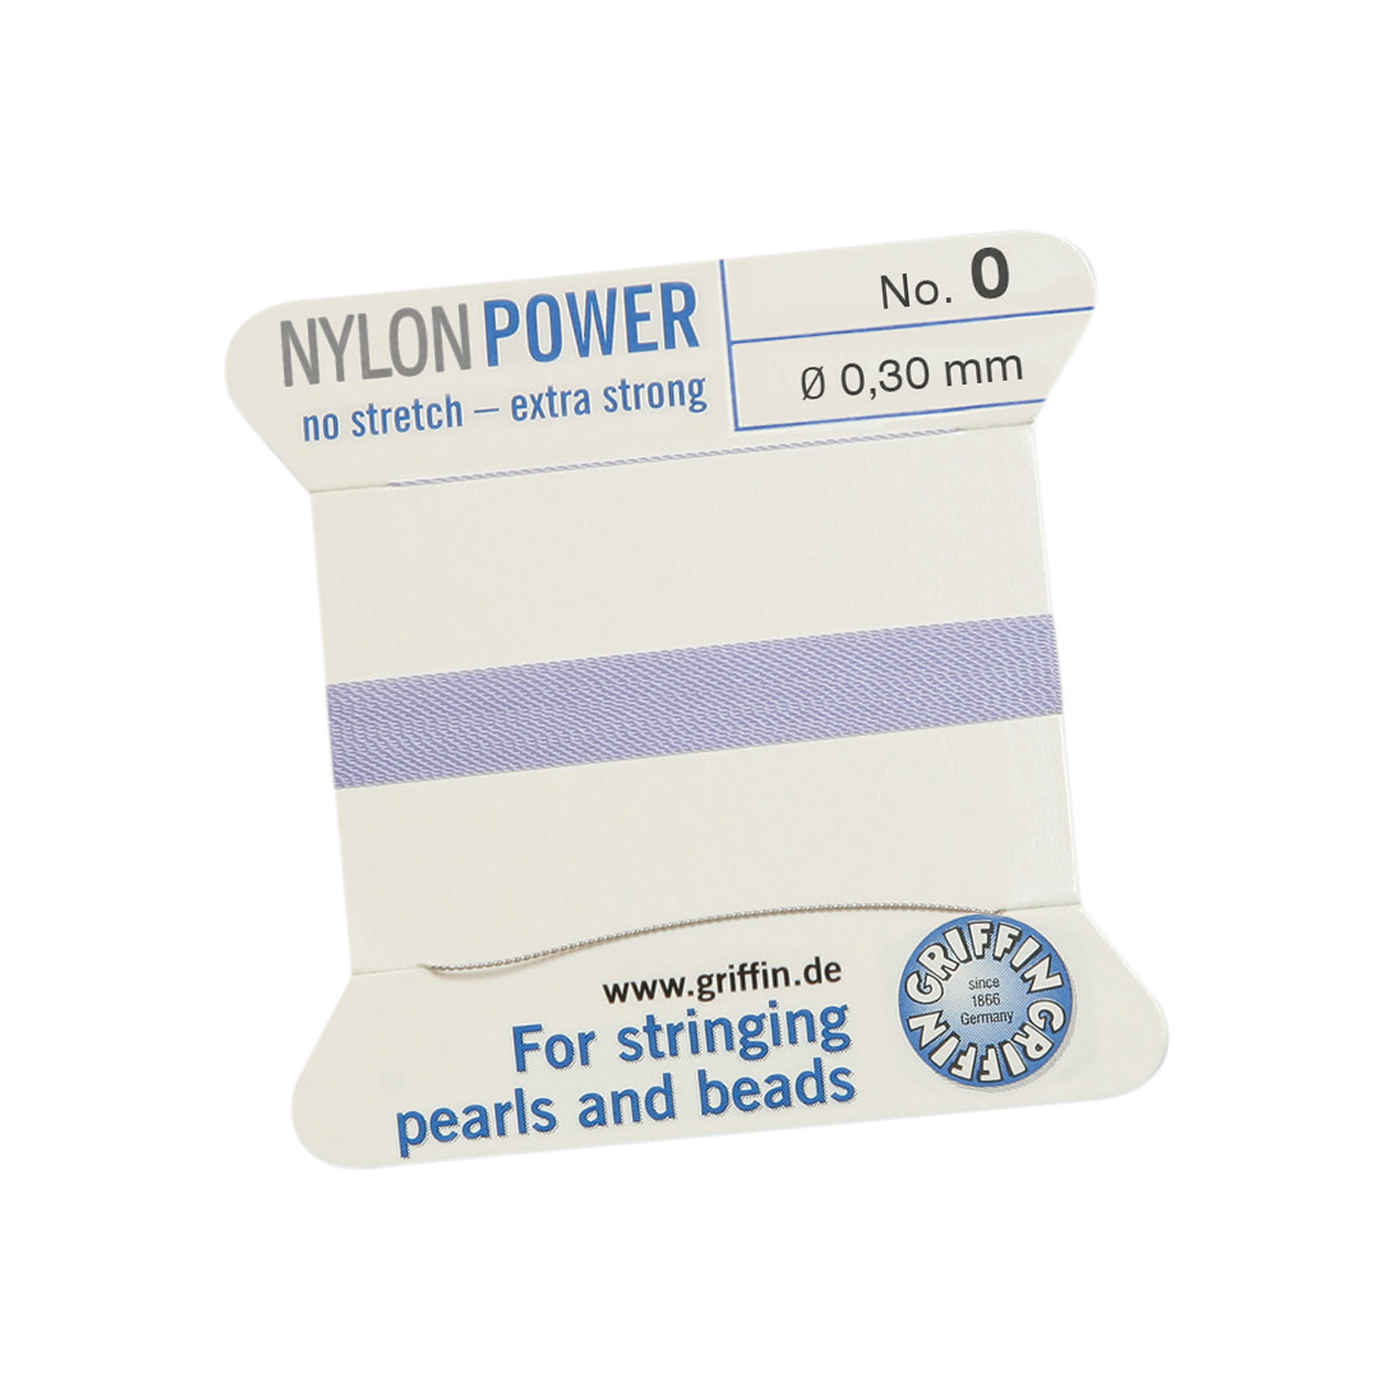 Bead Cord NylonPower, Violet, No. 0 - 2 m